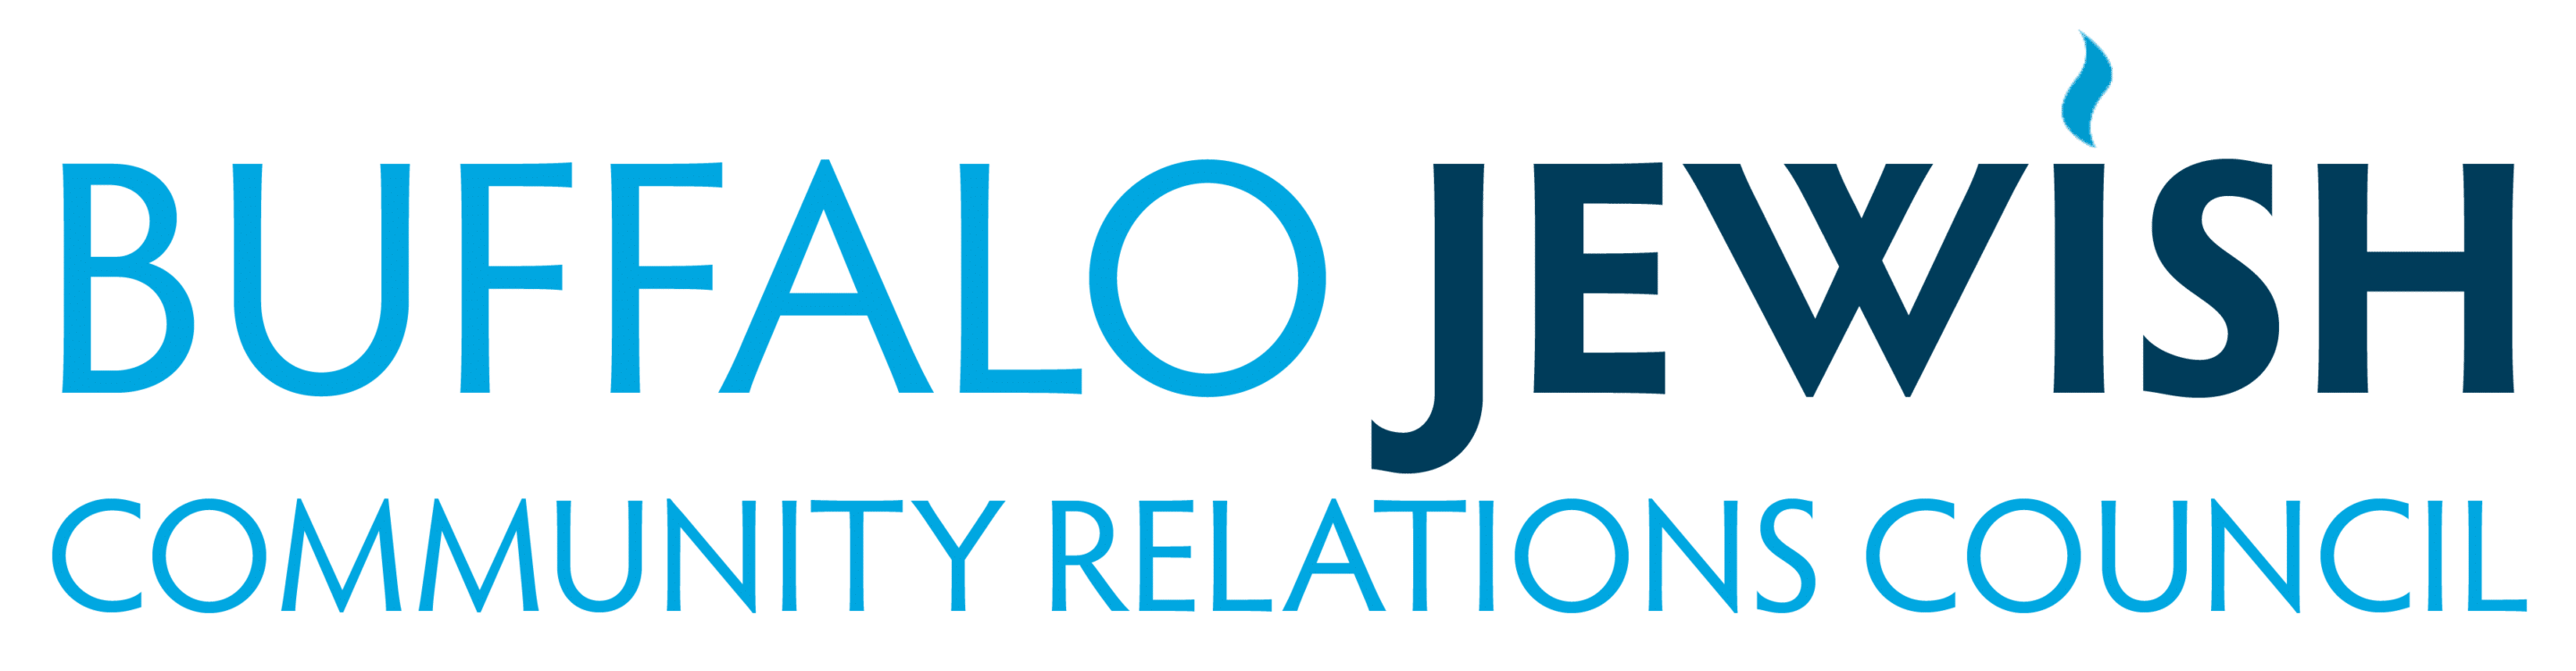 Building Relationships - Buffalo JCRC Logo 1